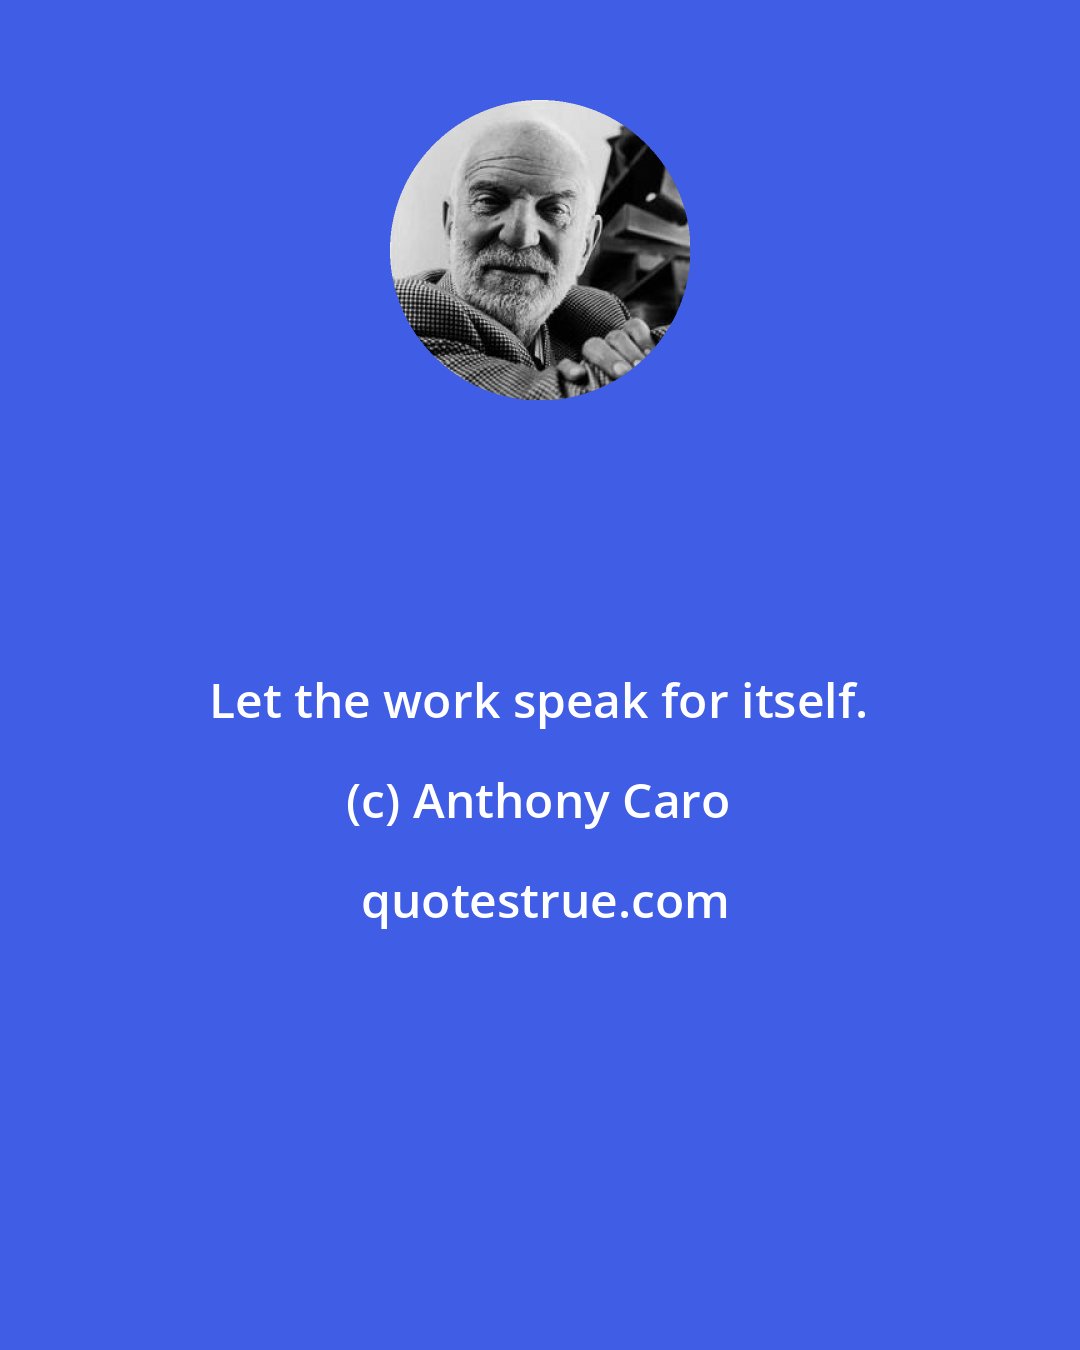 Anthony Caro: Let the work speak for itself.